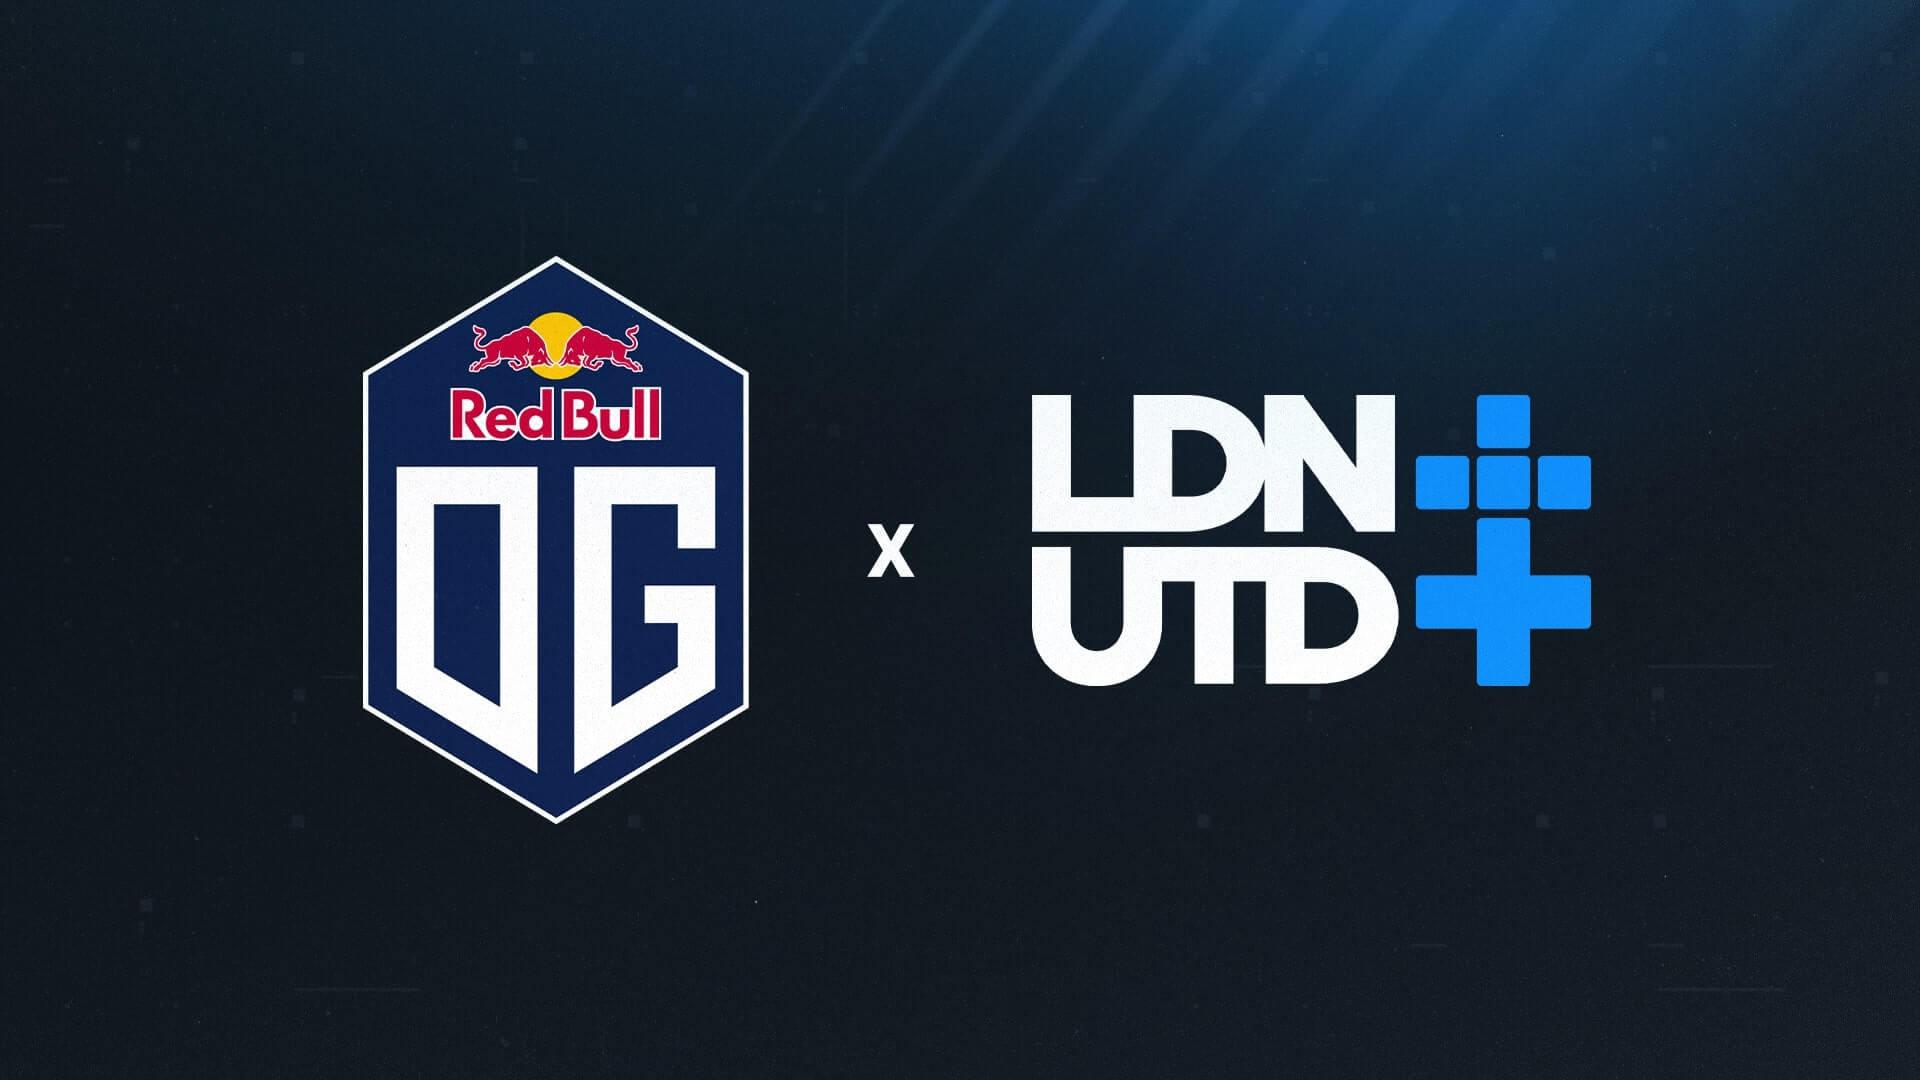 LDN UTD logo and OG Esports logo side by sideA